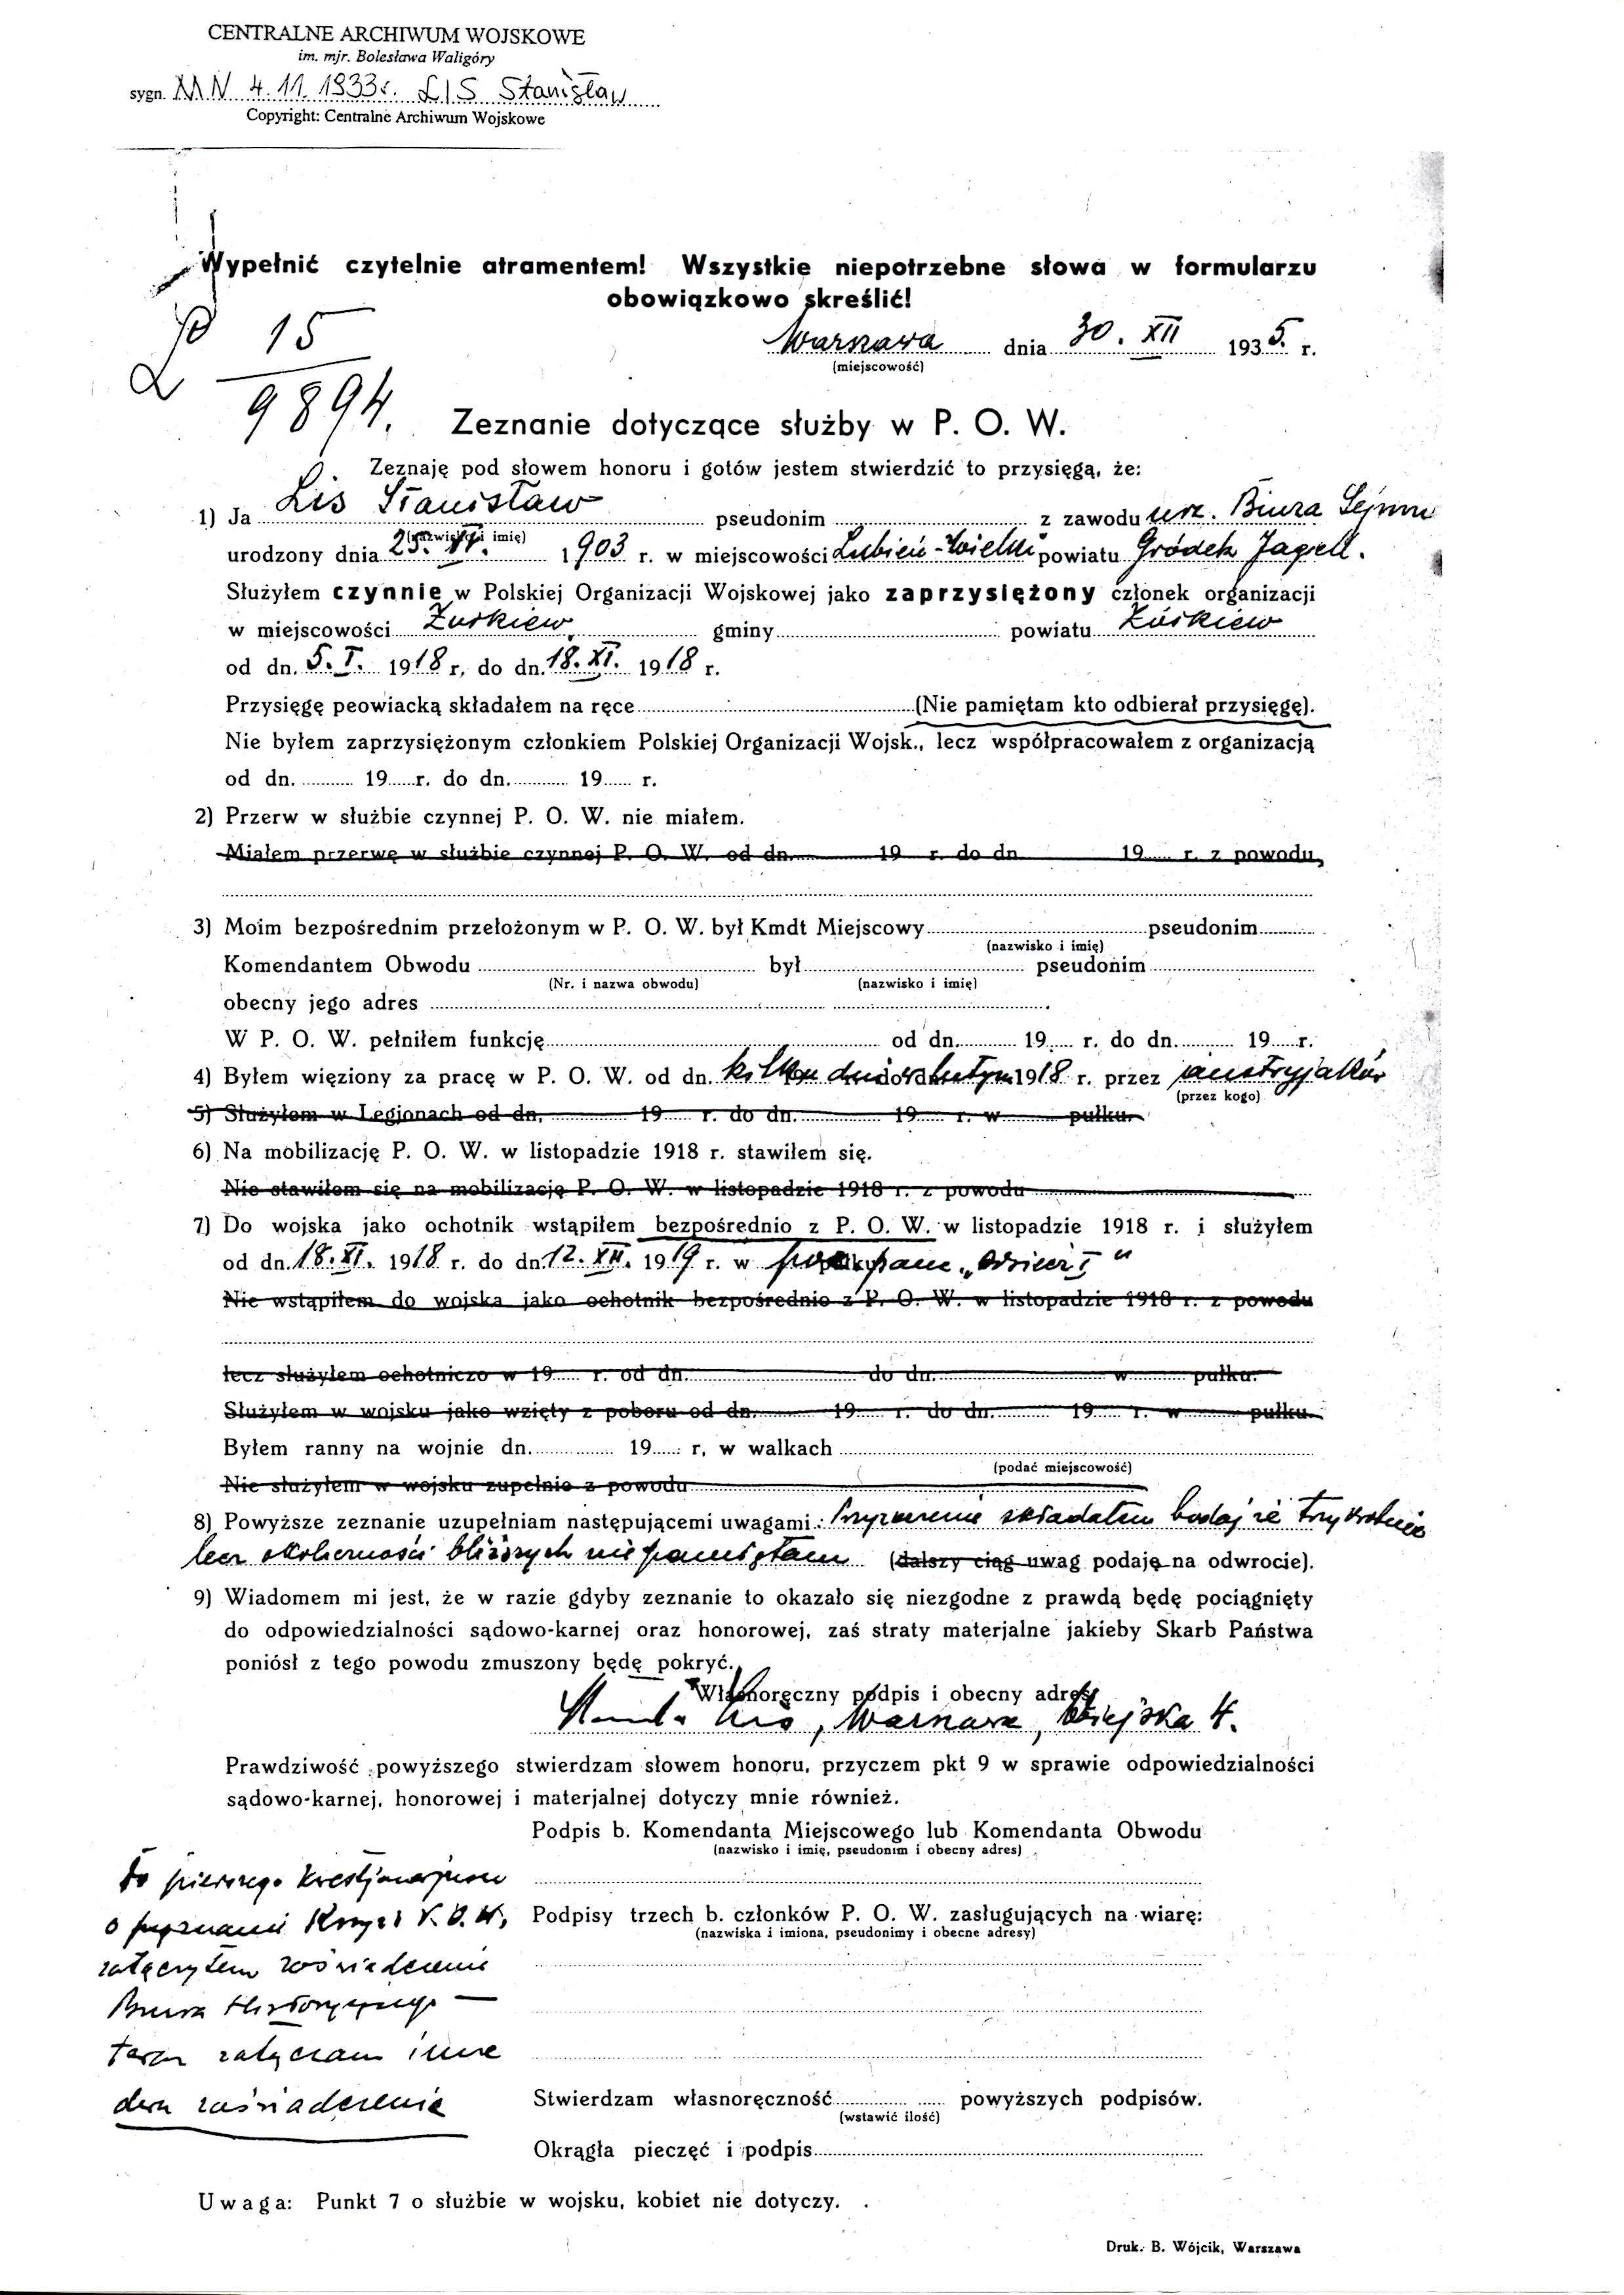 Stanislaw Lis Testimony regarding Service in the P.O.W 1935.jpg